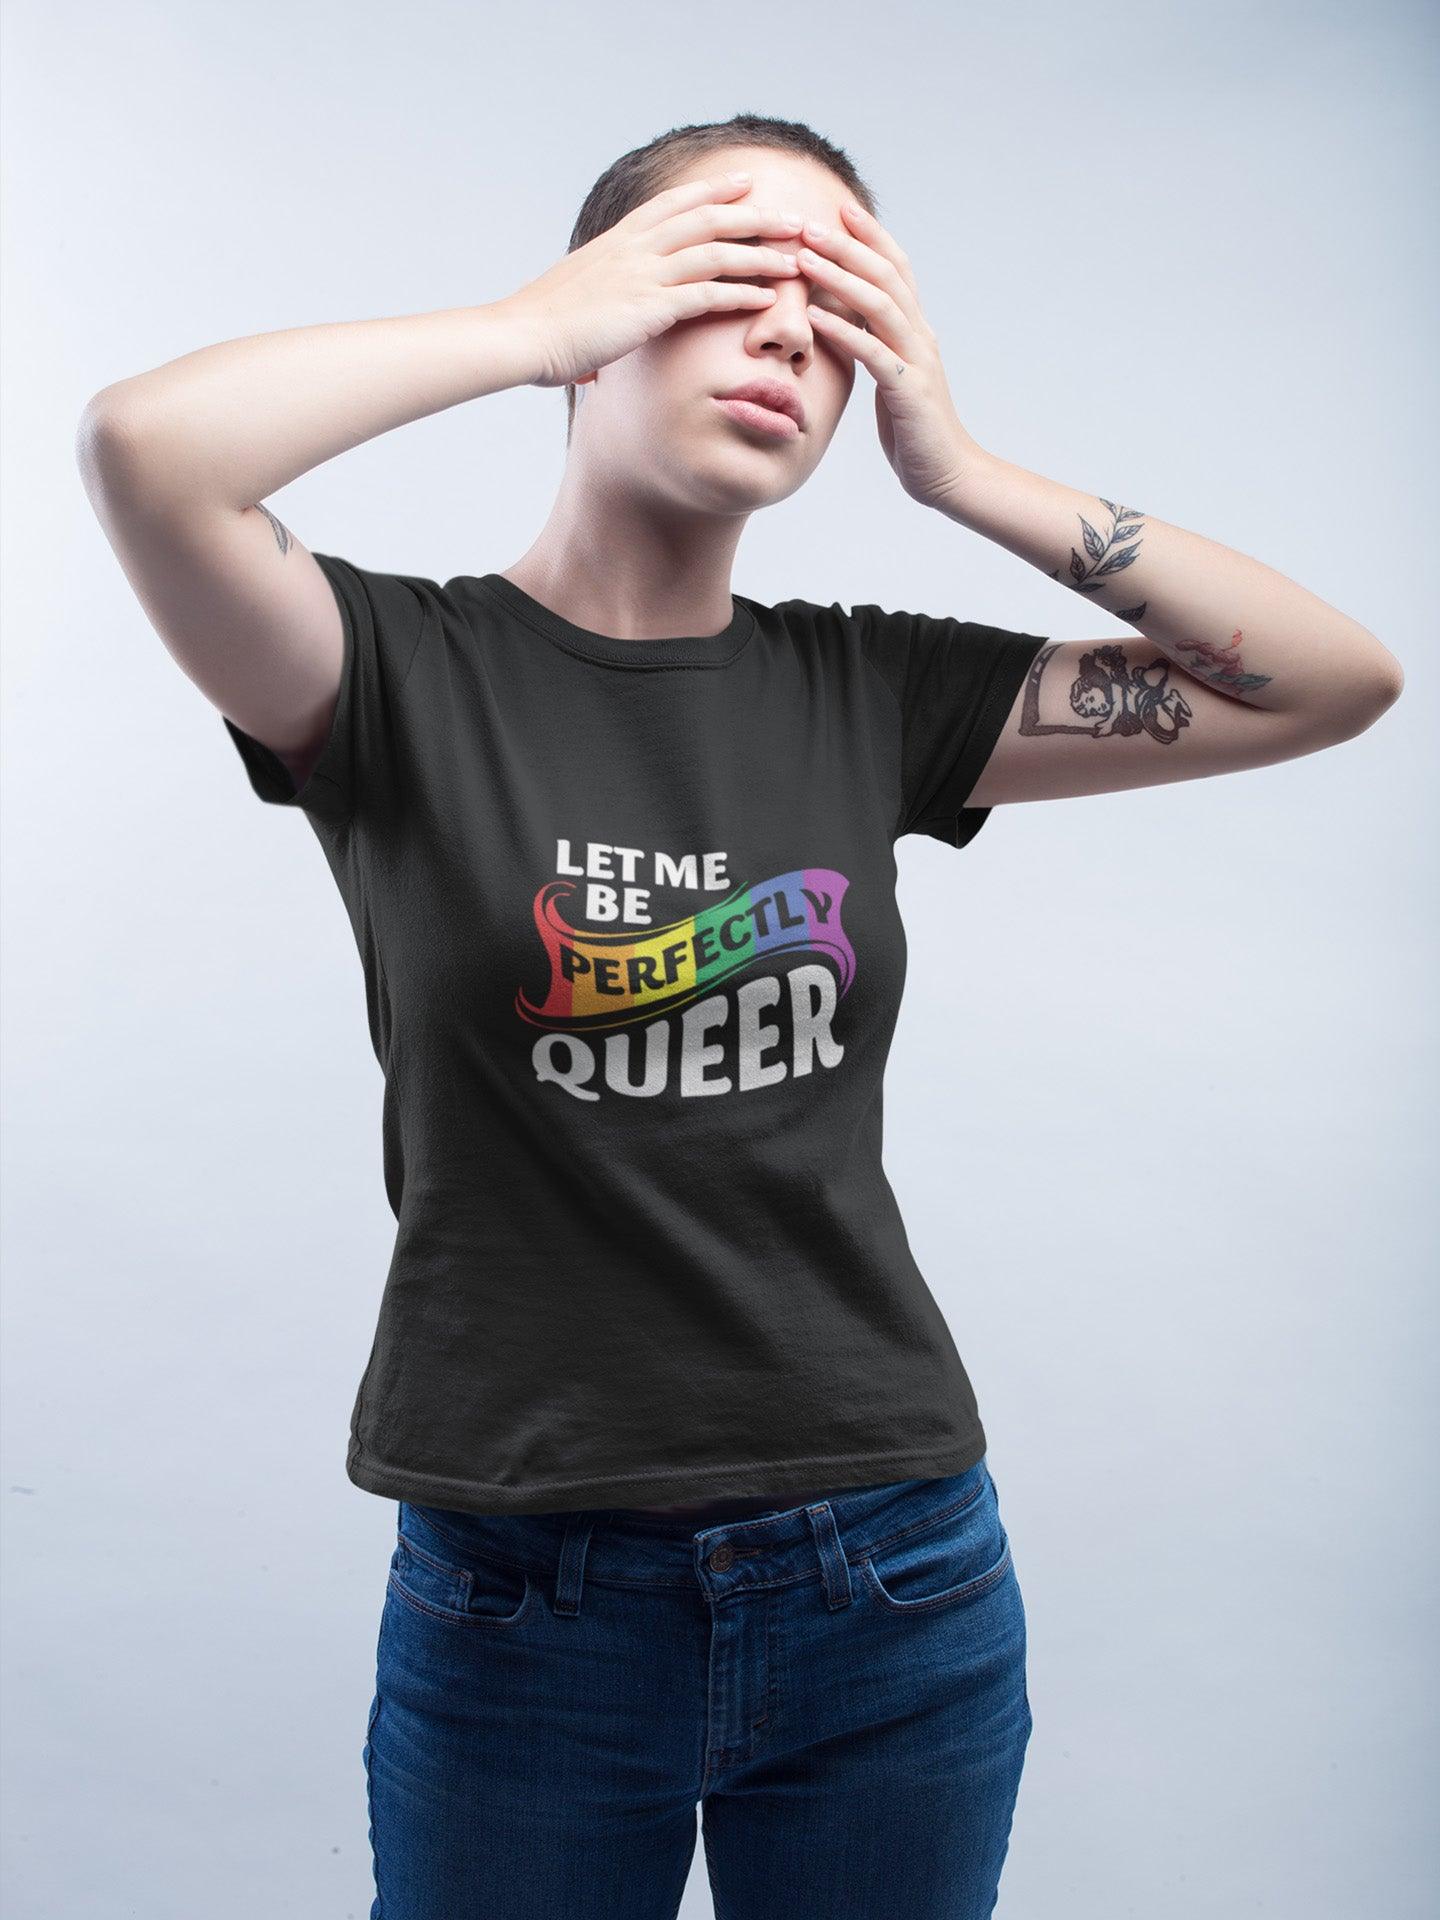 Tricou LGBT femei negru Hay Creations, colecția Love is Love Pride, bumbac organic premium vegan. "Let Me Be Perfectly Queer".